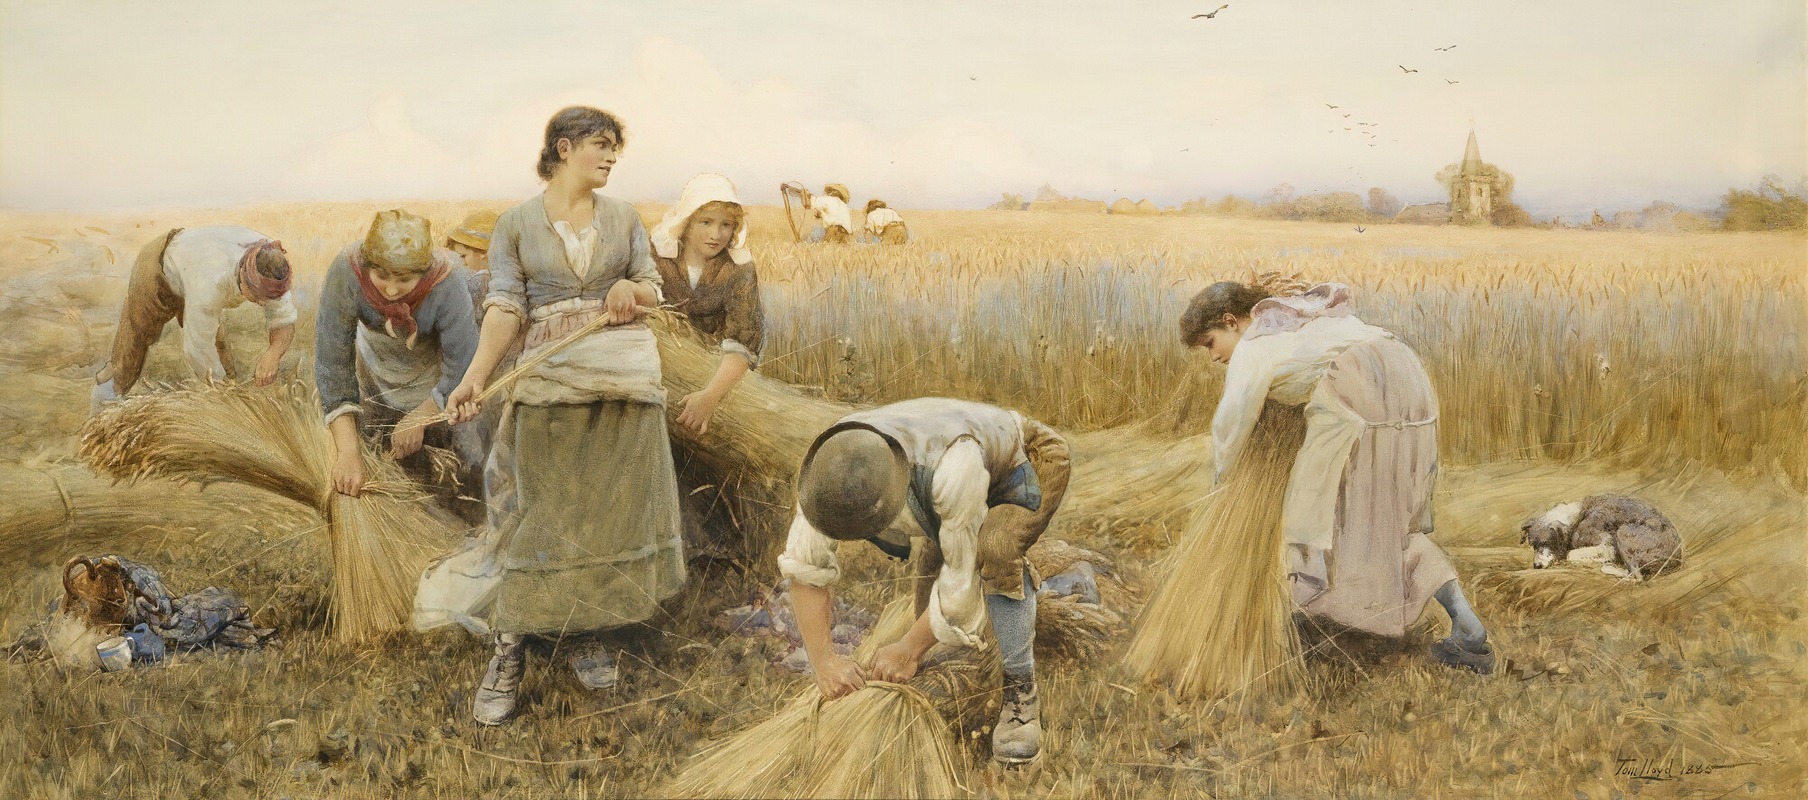 Thomas James Lloyd - The Golden Grain